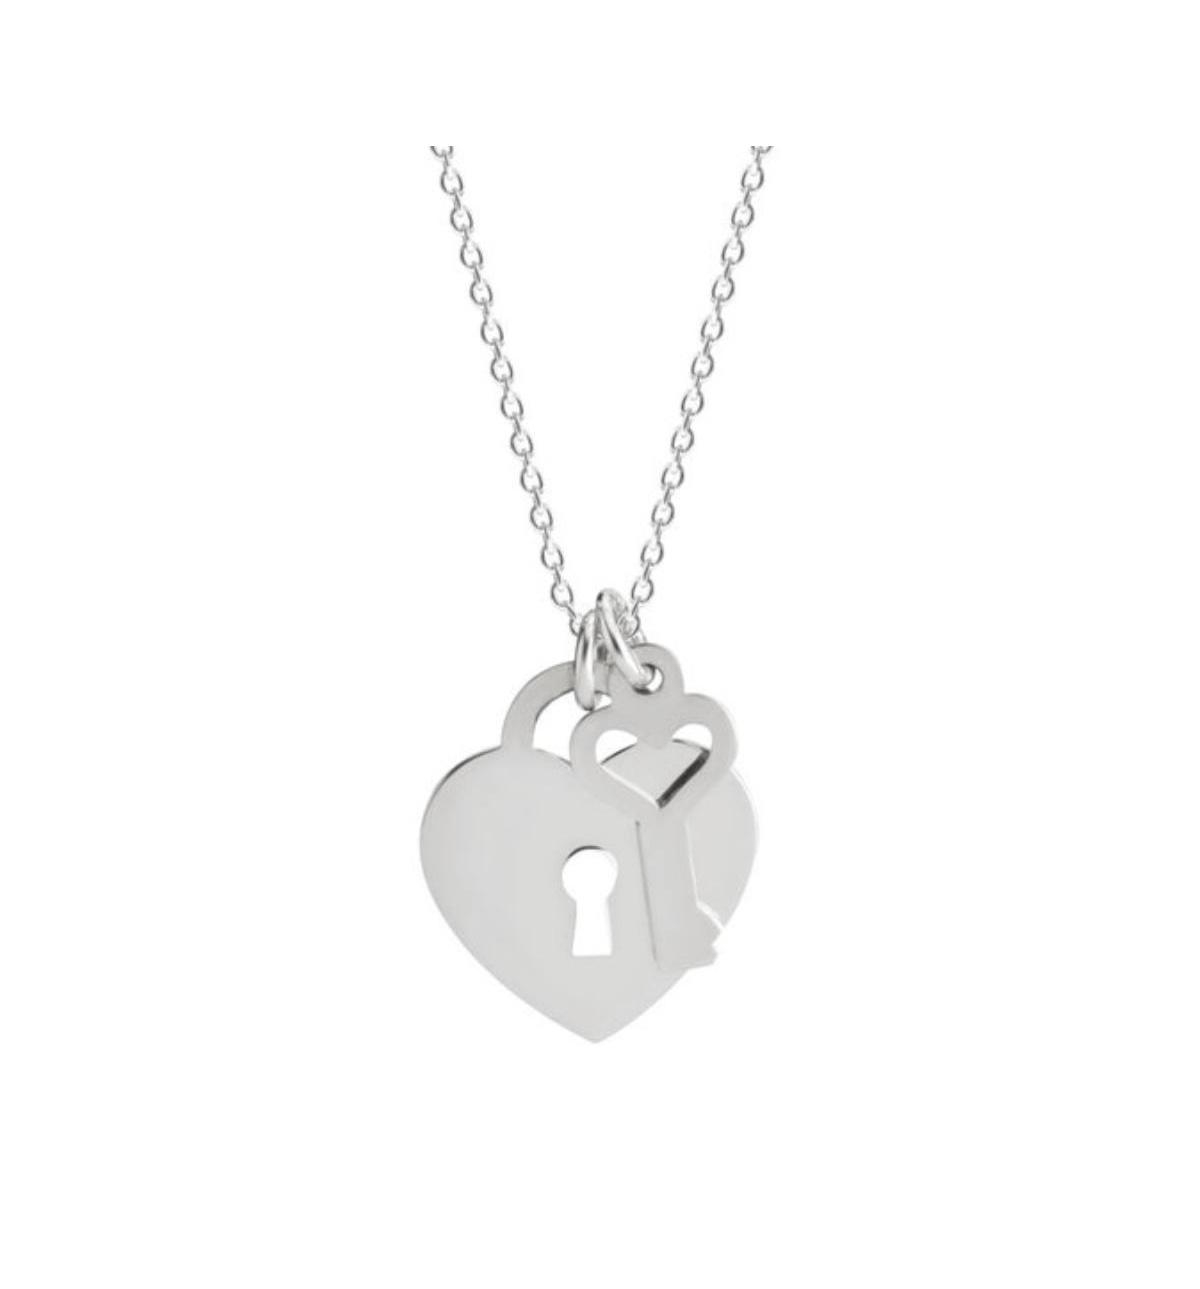 Heart Lock Necklace - Silver